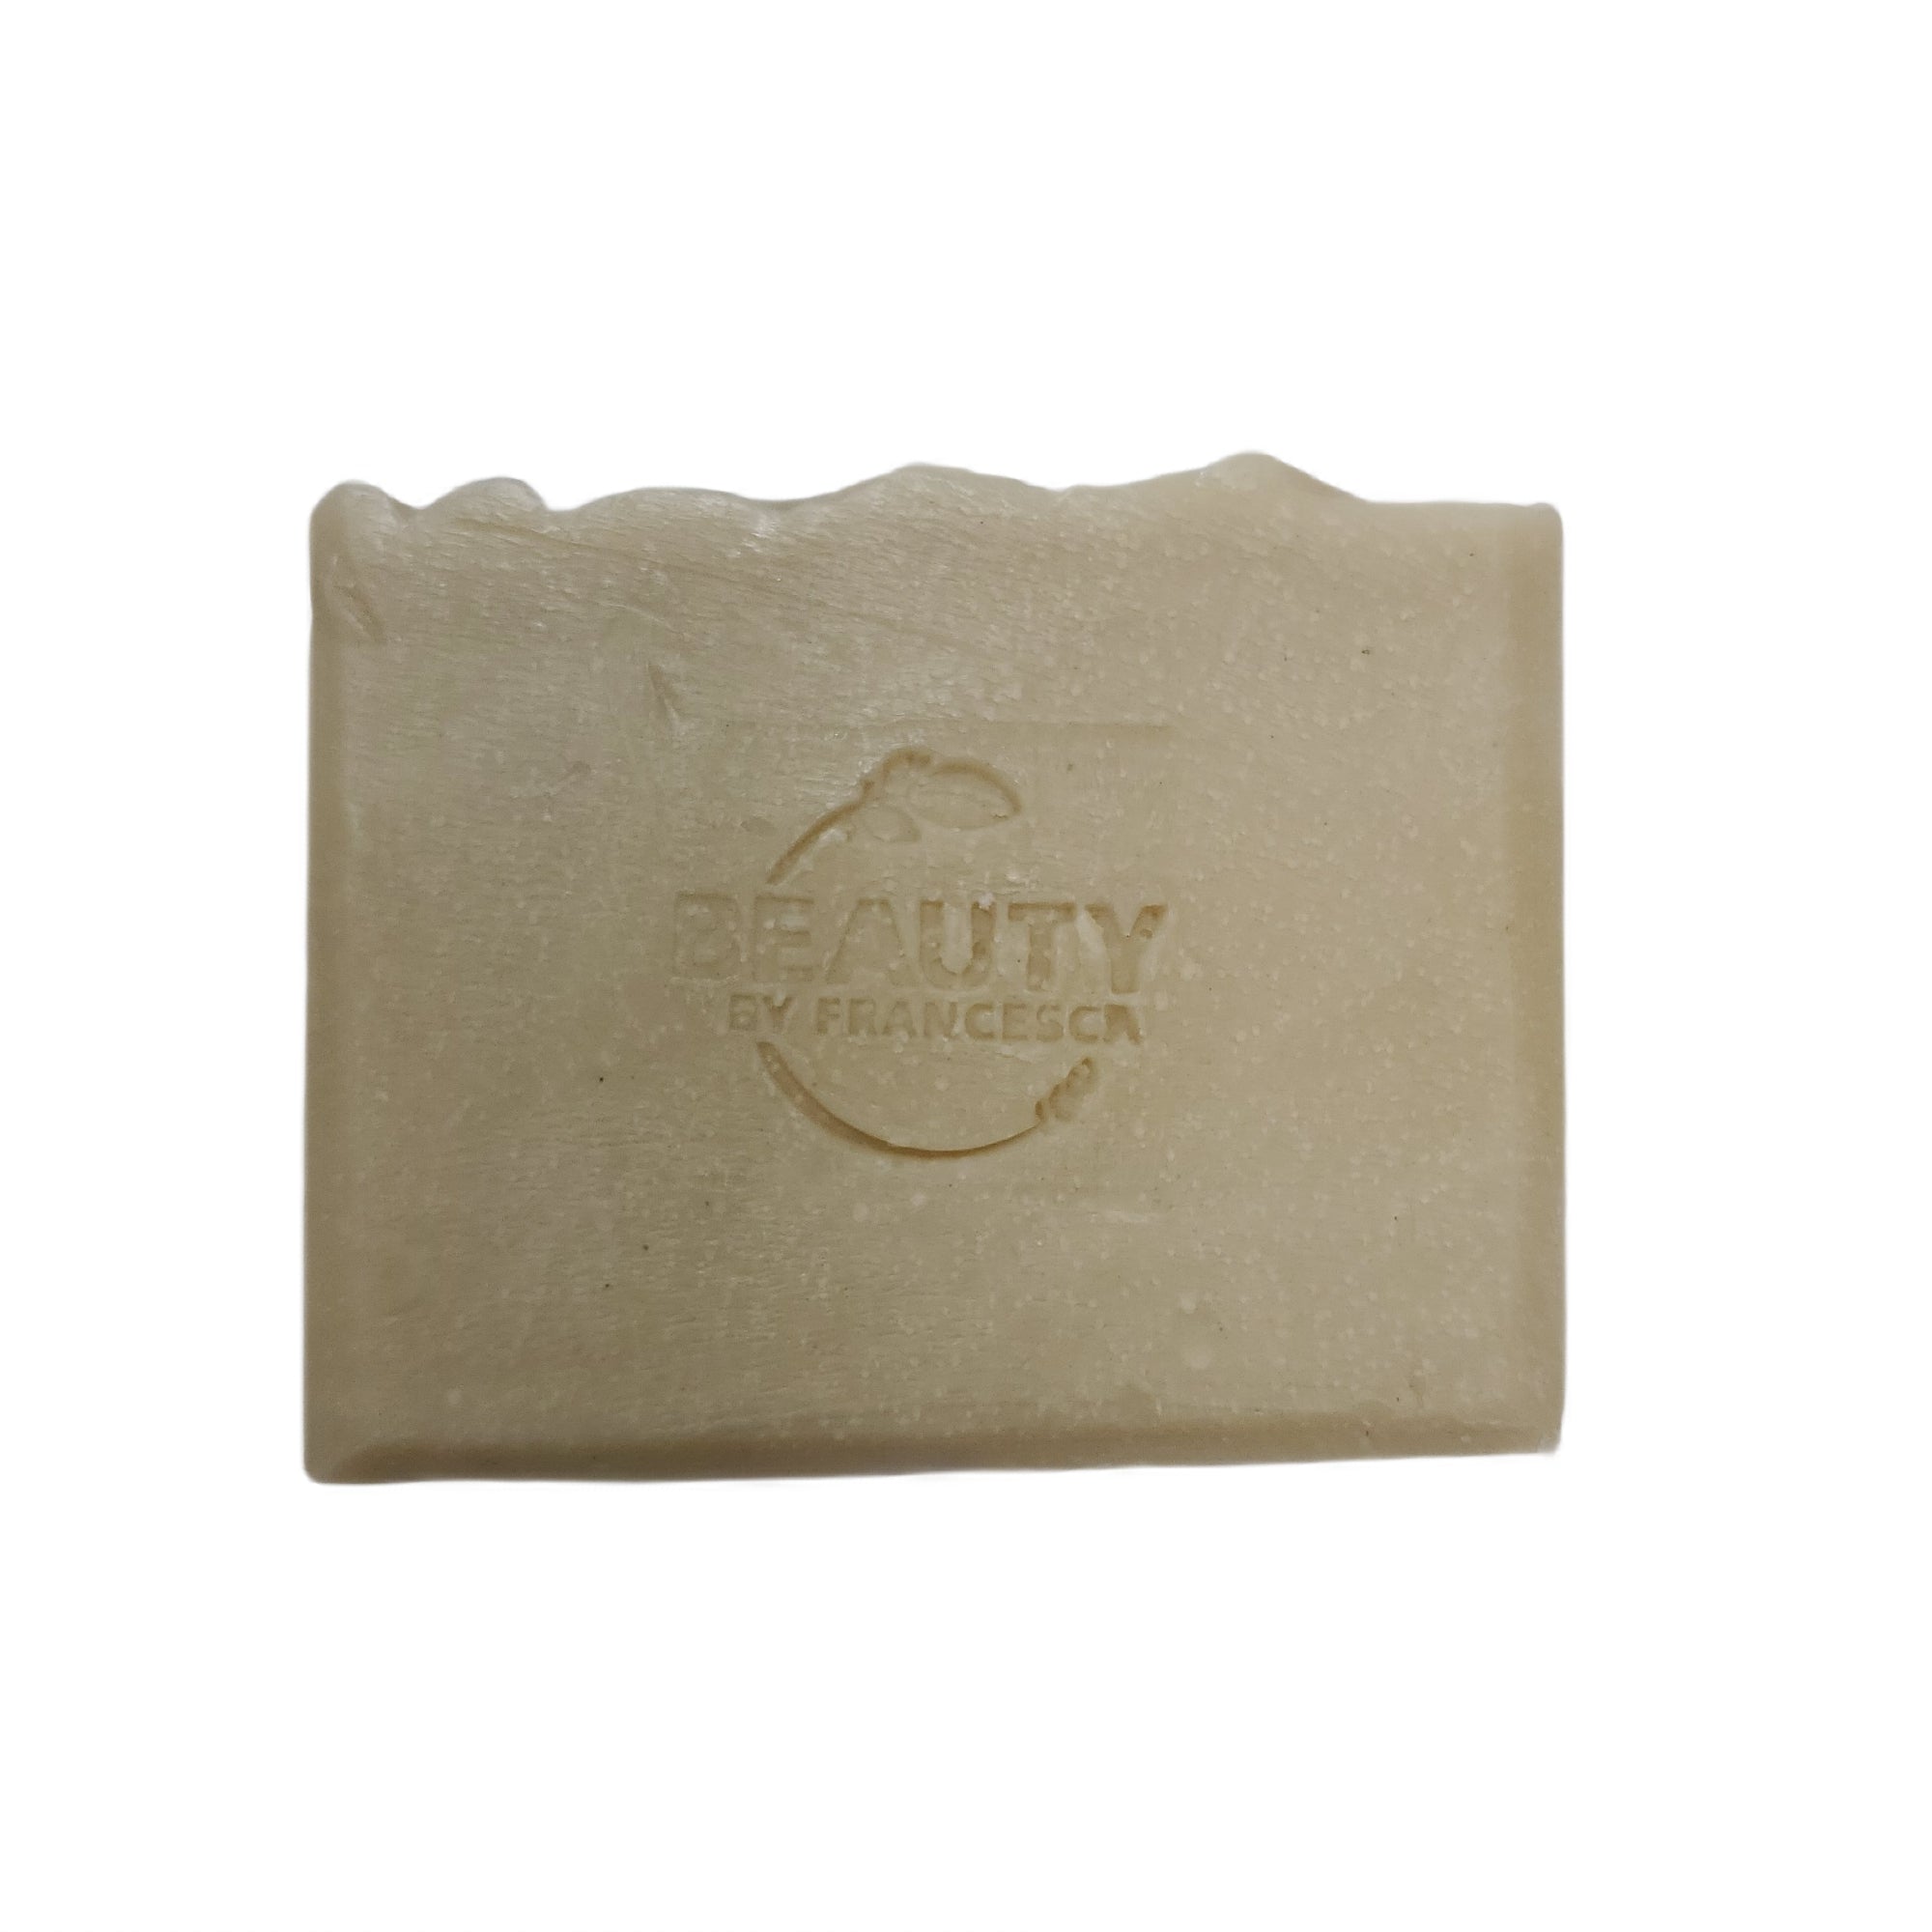 4 ounce Eucalyptus Handmade Soap Bar with Logo Brand in center